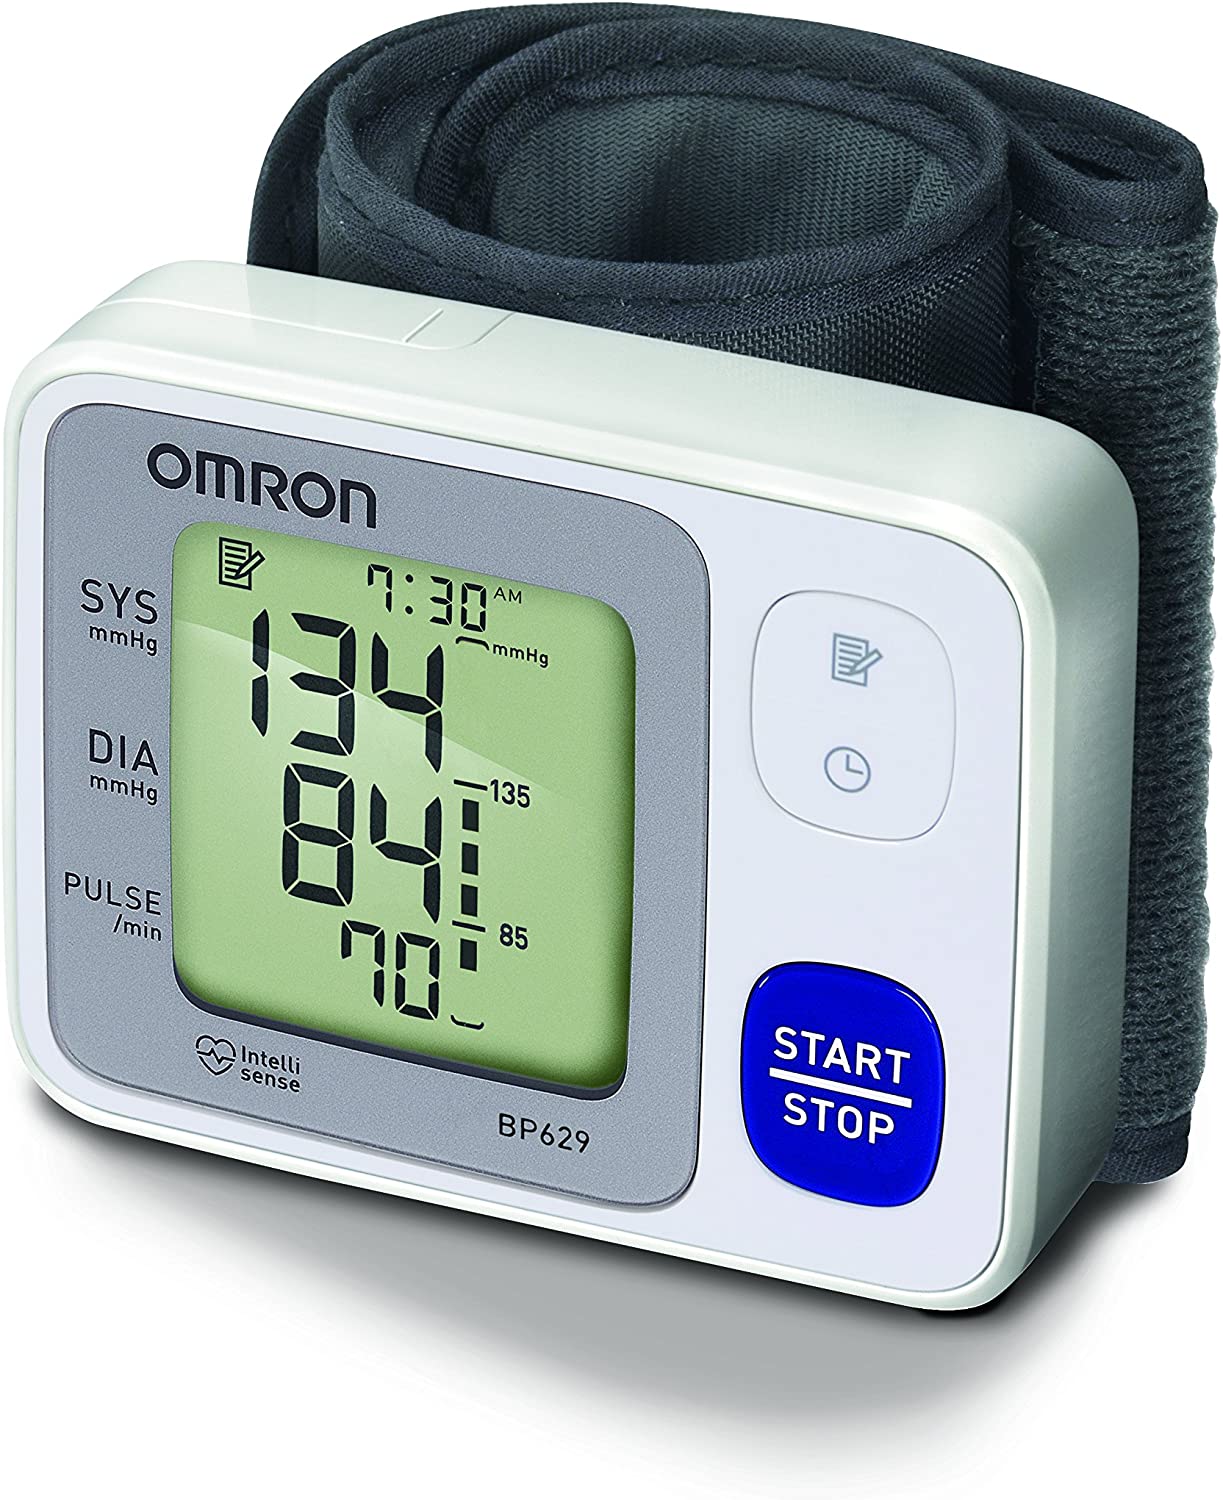 10 Best Wrist Blood Pressure Monitor Reviews